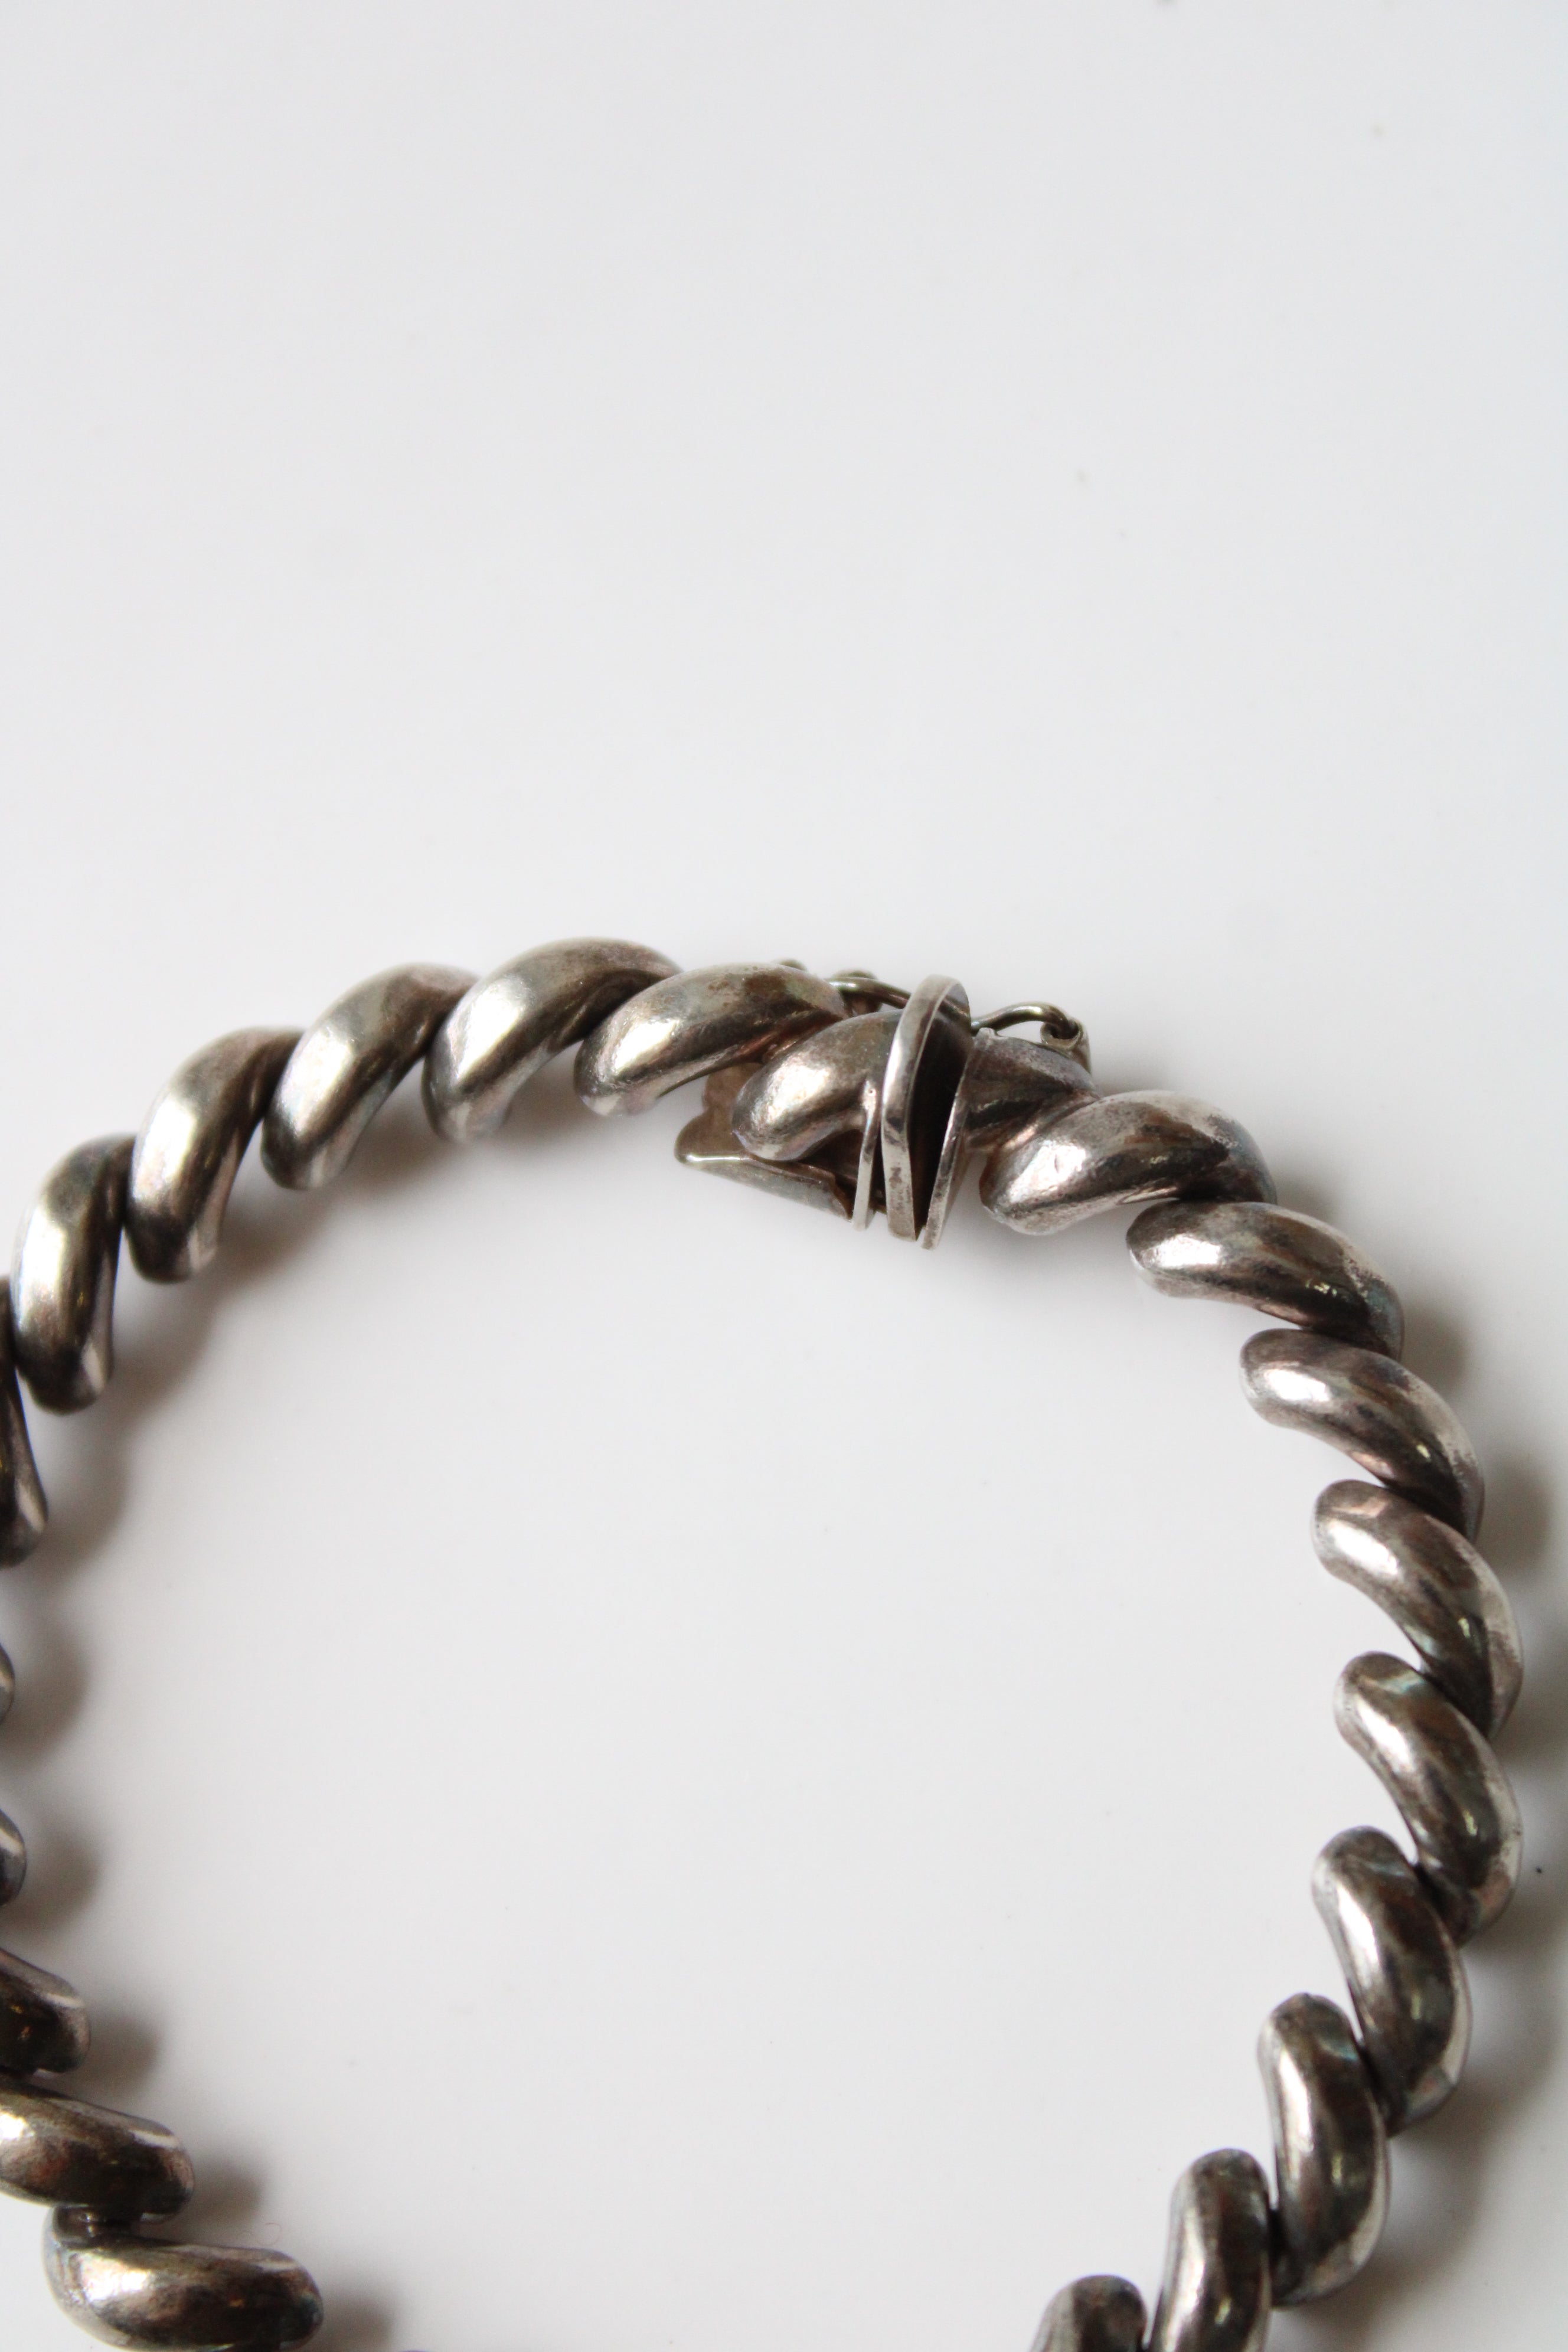 Vintage Sterling Silver Macaroni Chain Bracelet